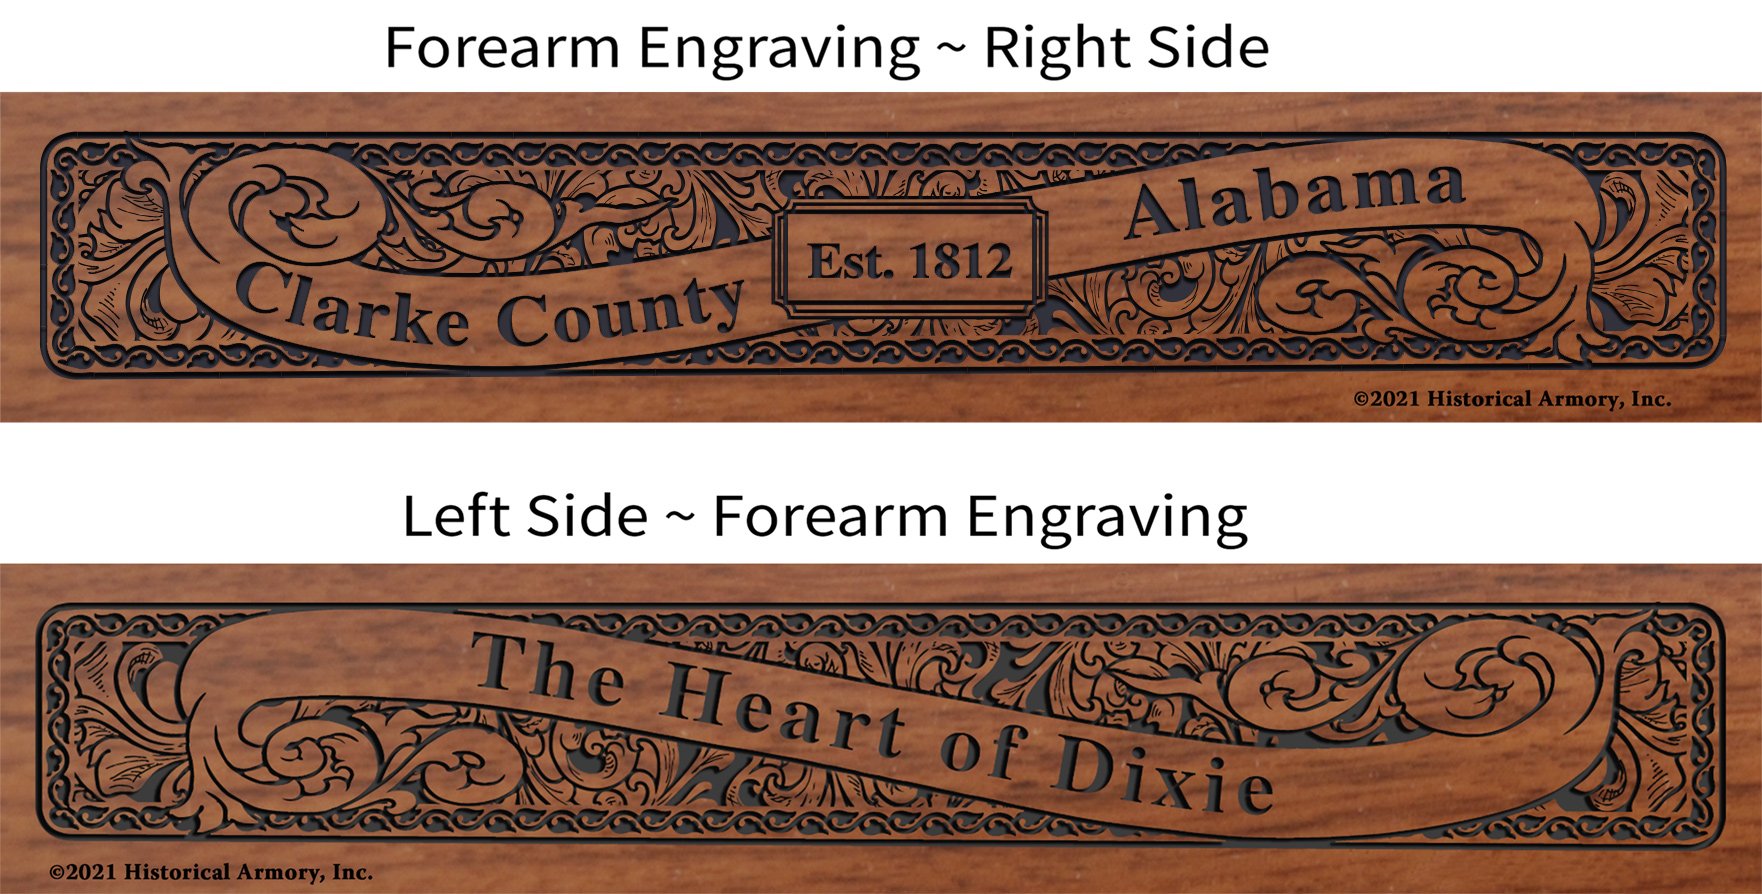 Clarke County Alabama Establishment and Motto History Engraved Rifle Forearm